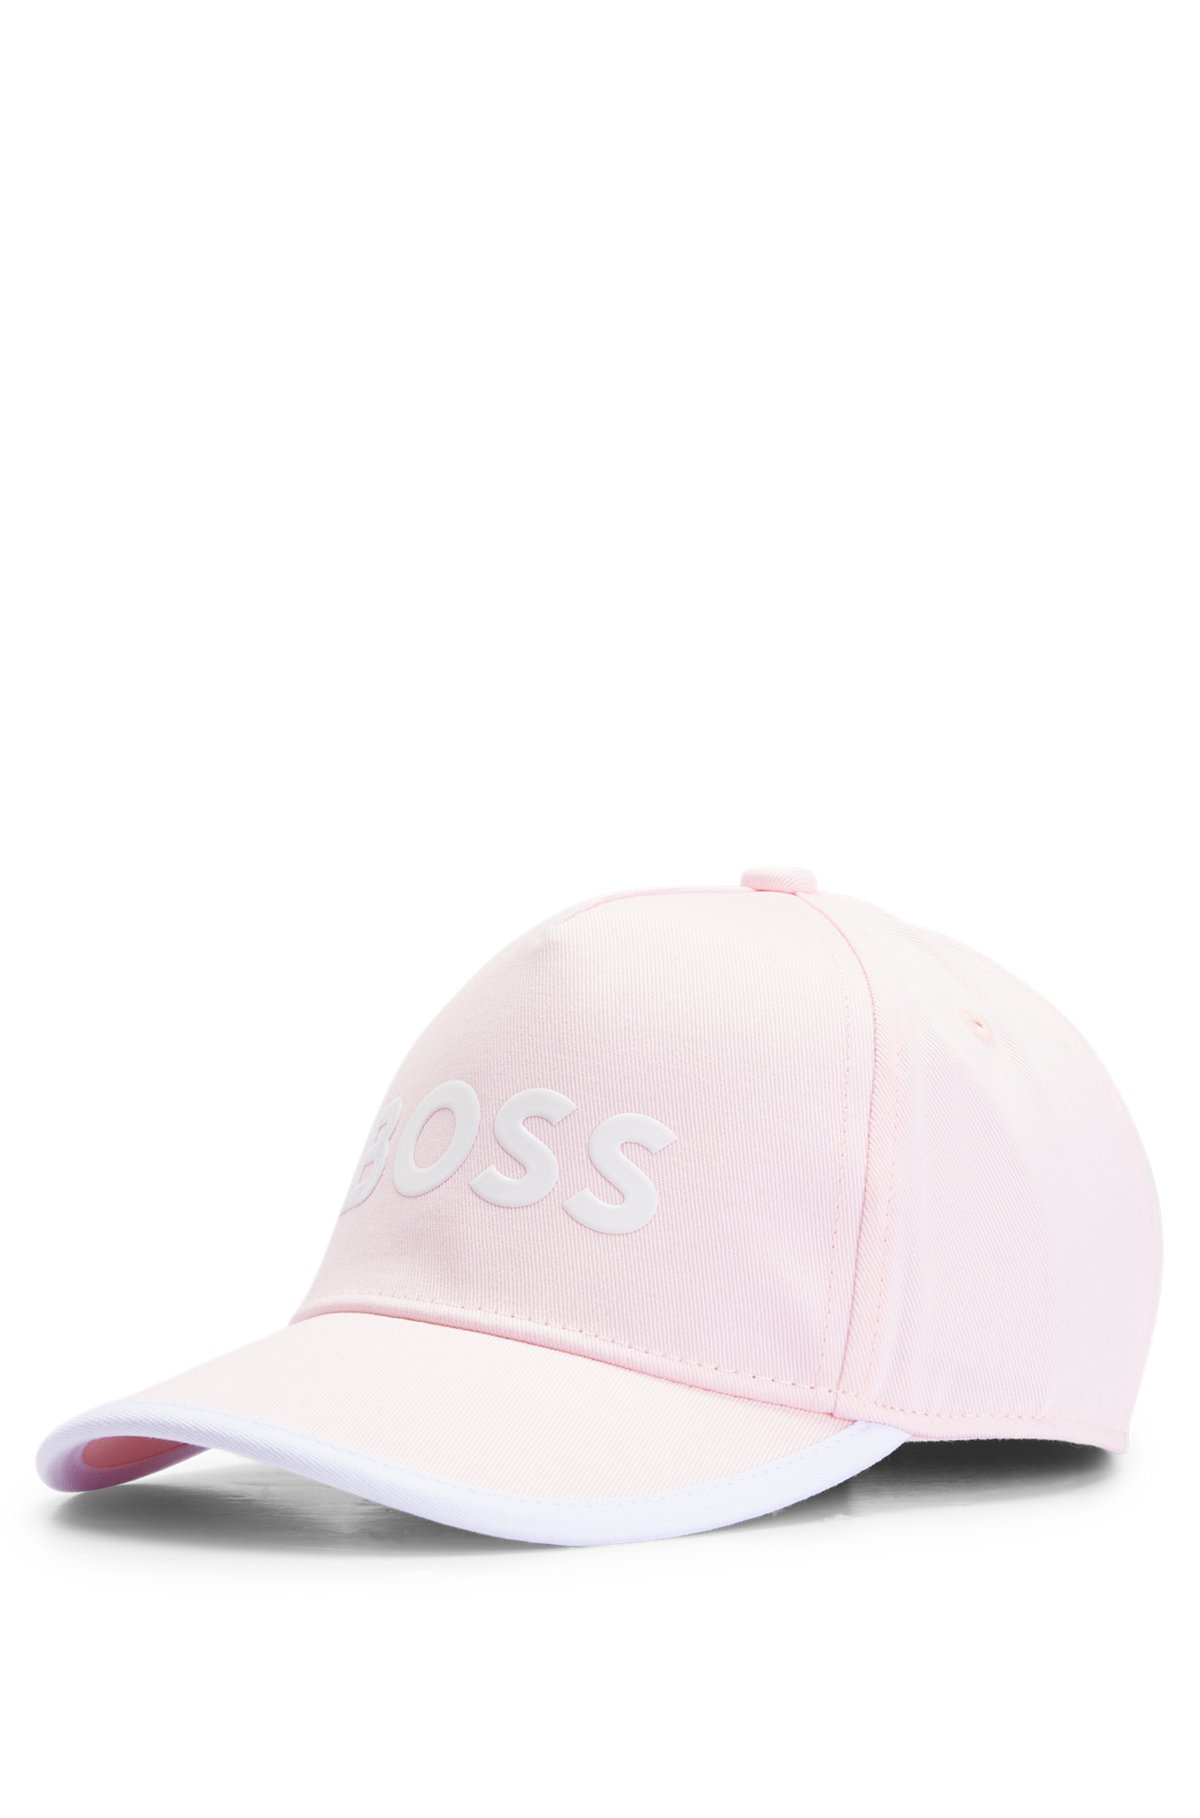 Kids' cap in cotton twill with contrast logo, Dark pink